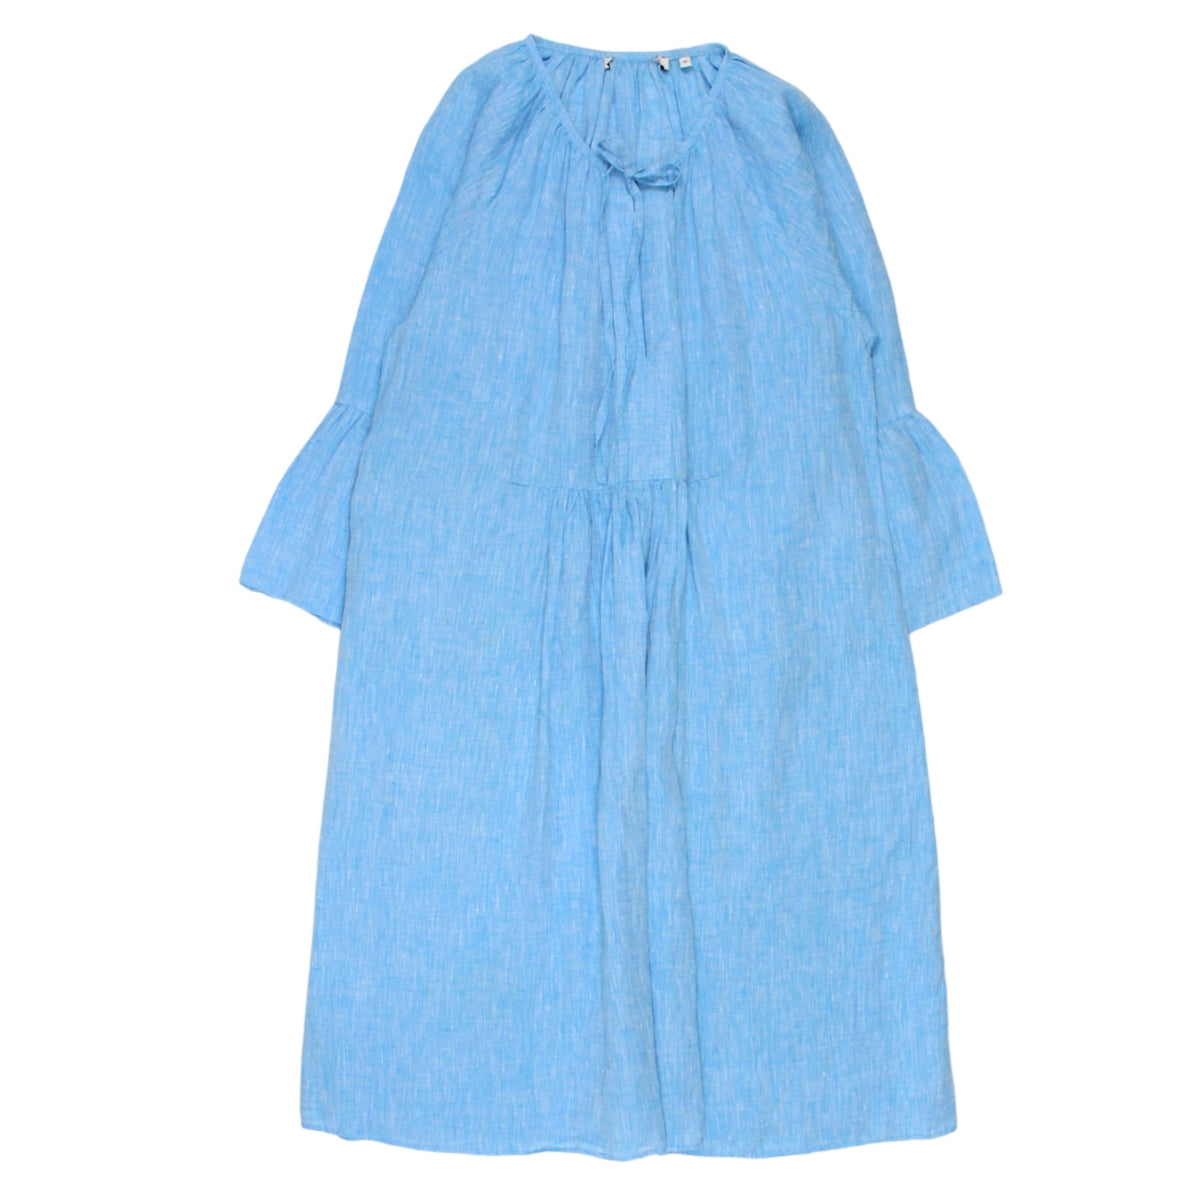 NRBY Turquoise Linen Dress - Sample